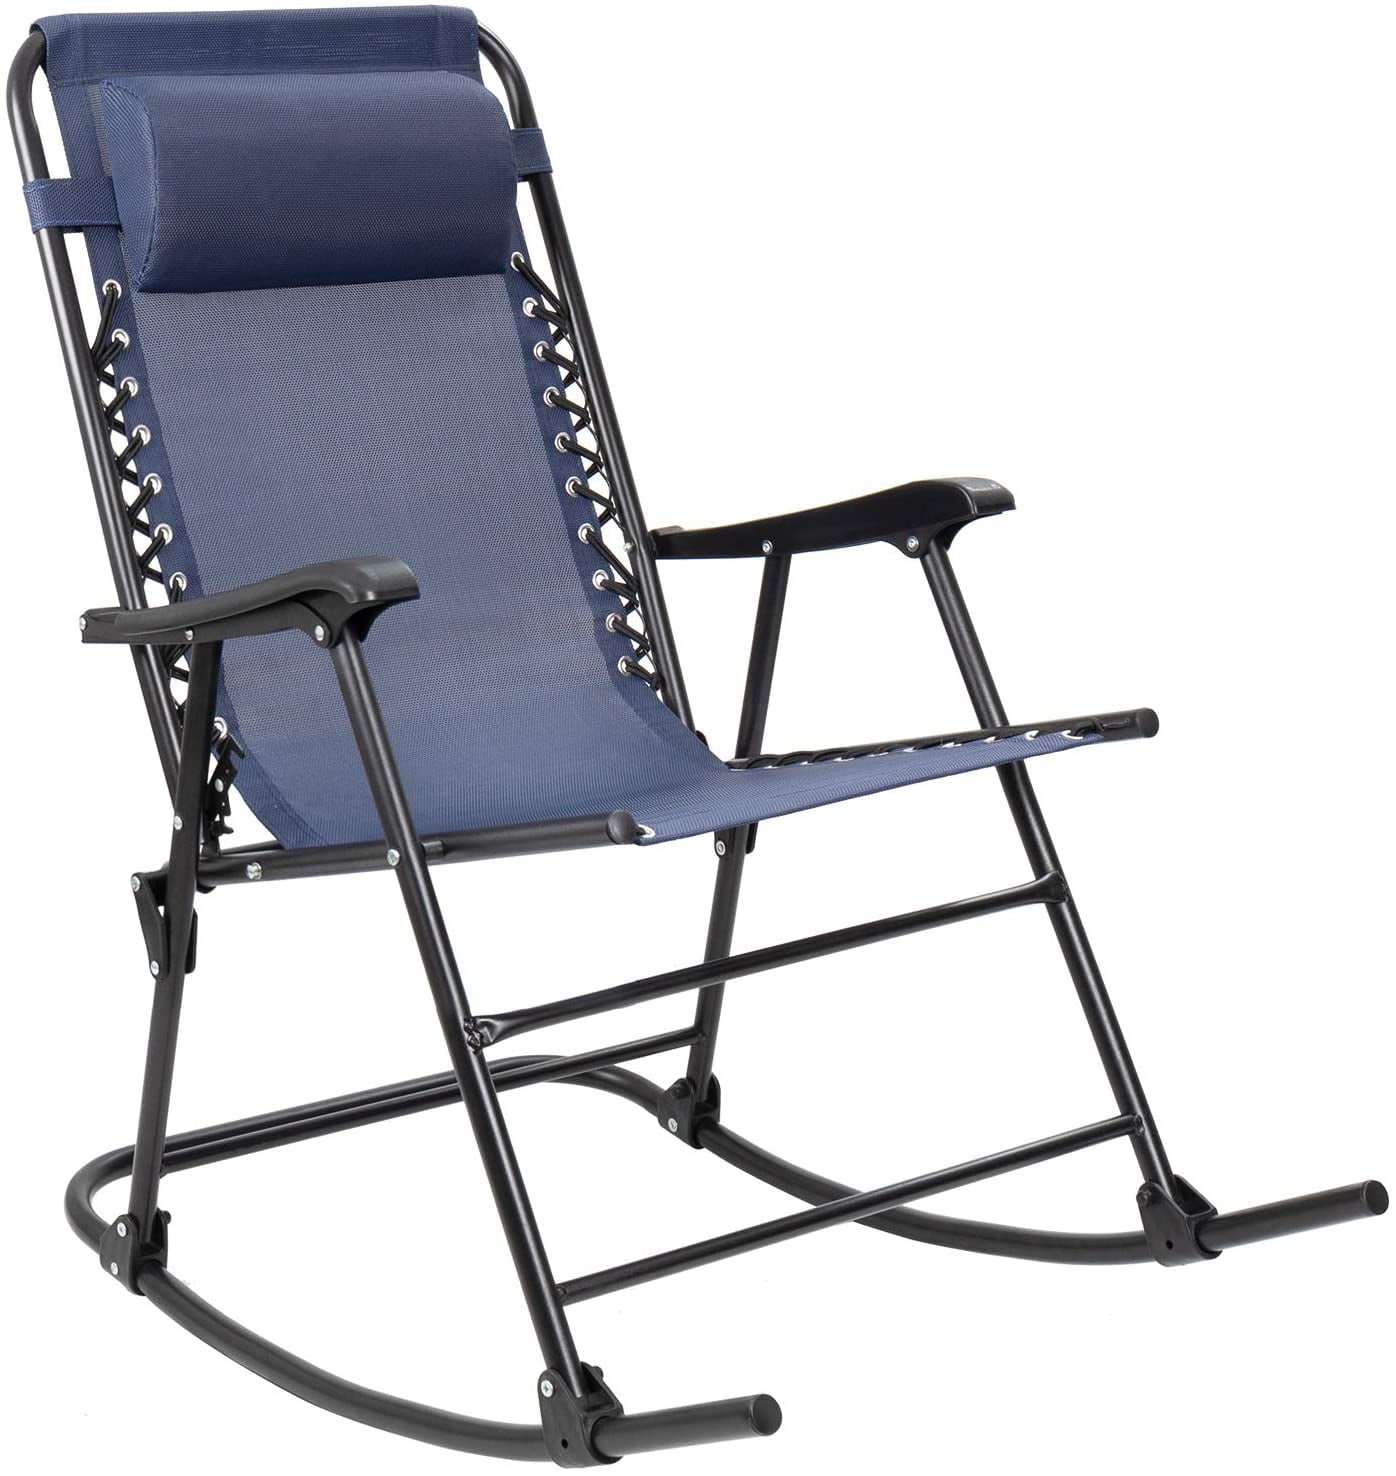 Devoko Zero Gravity Rocking Chair with Headrest Pillow Folding Recliner Foldable Lounge Chair, Blue